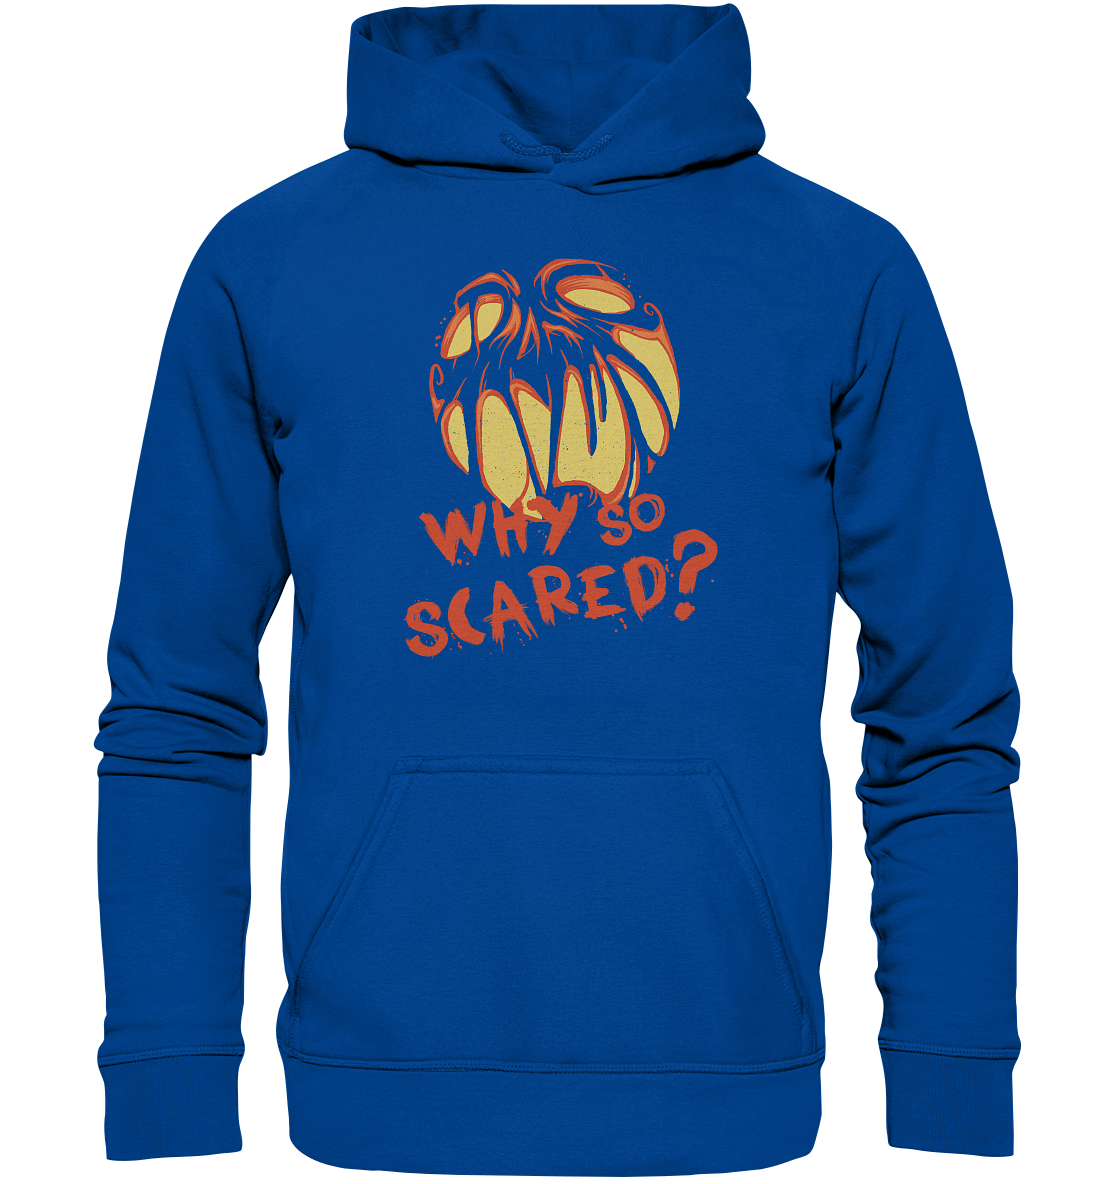 Halloween: Why so scared? - Basic Unisex Hoodie